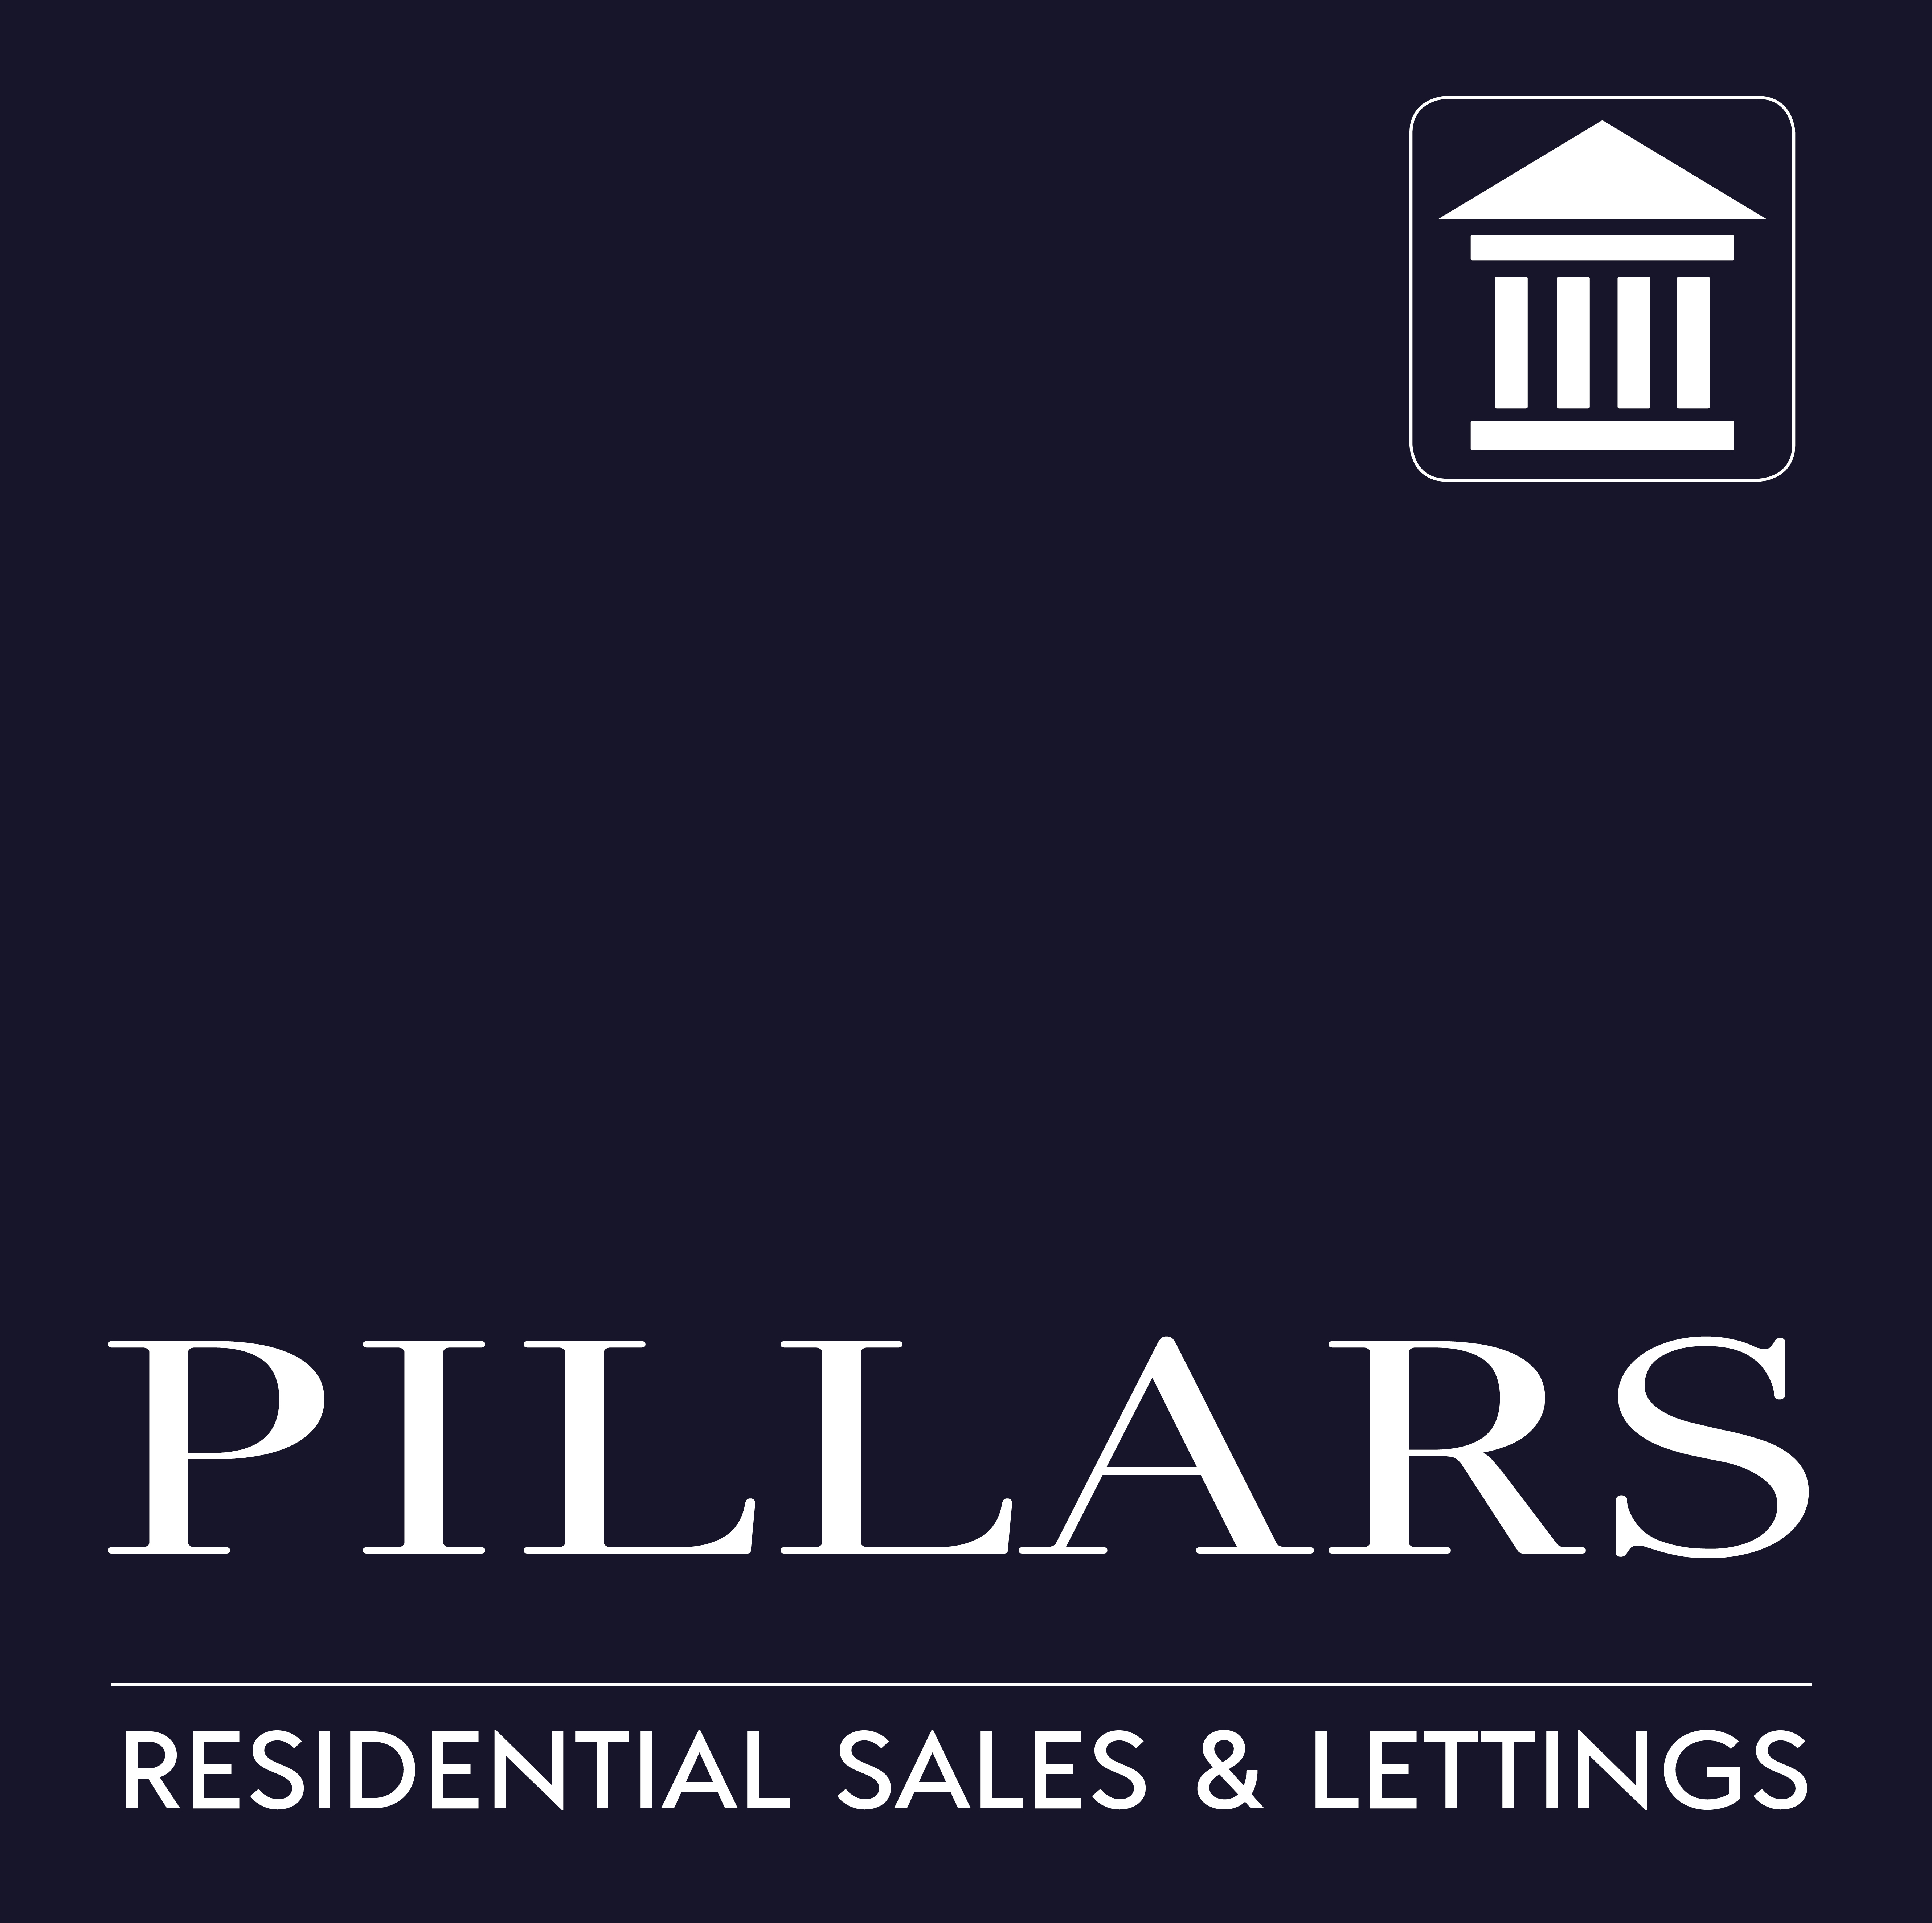 Pillars Estate Agents